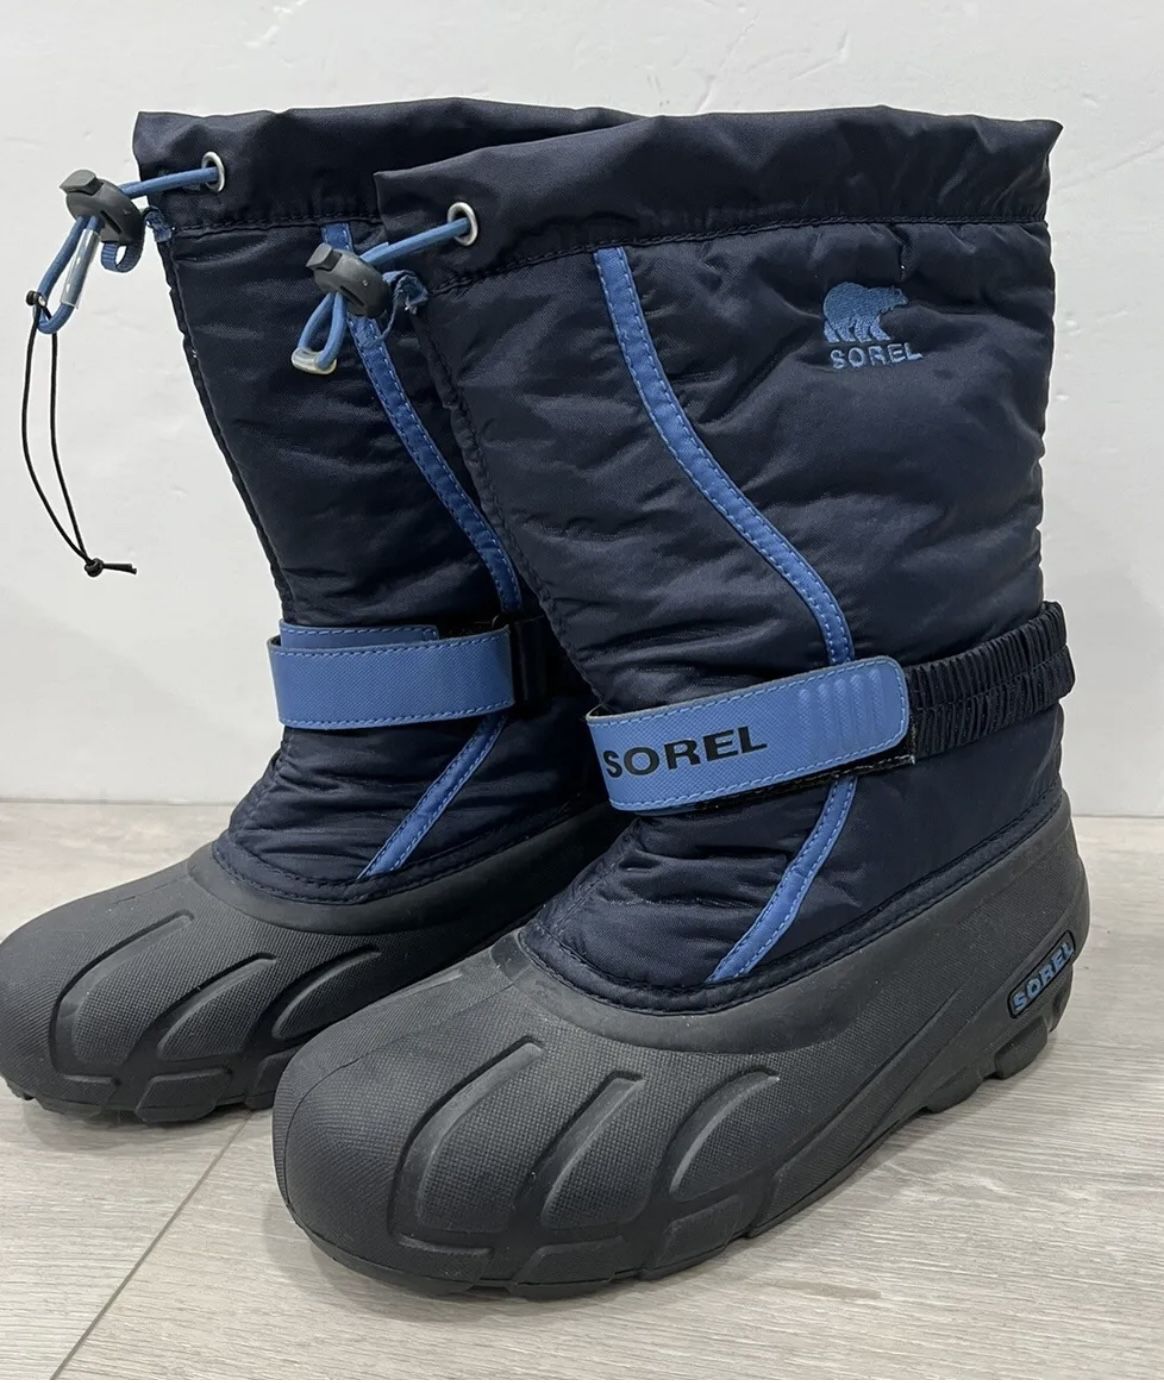 Sorel Winter Snow Boots Kids 6 Or Women’s 7.5